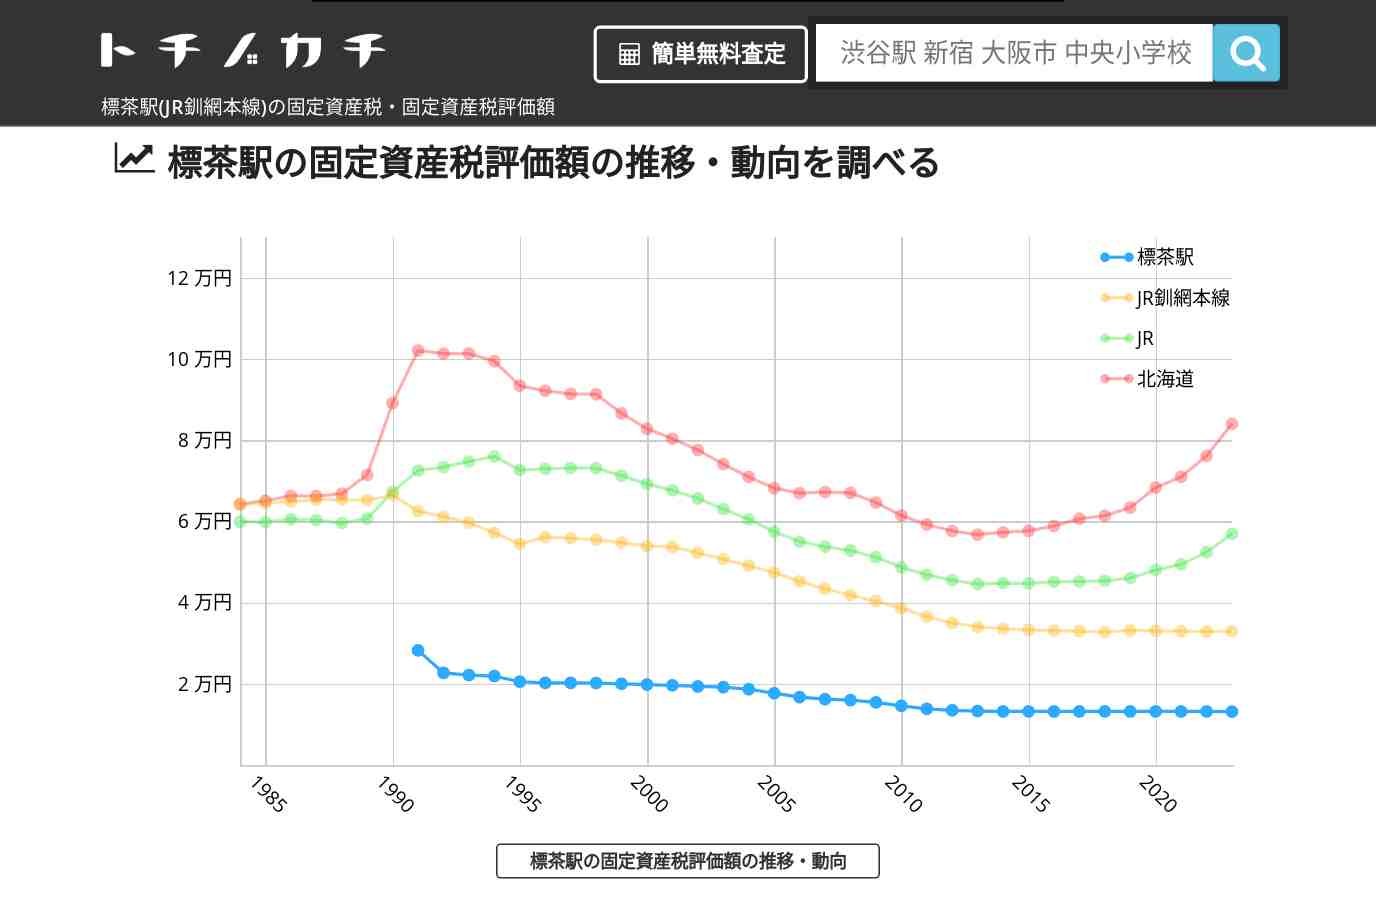 標茶駅(JR釧網本線)の固定資産税・固定資産税評価額 | トチノカチ